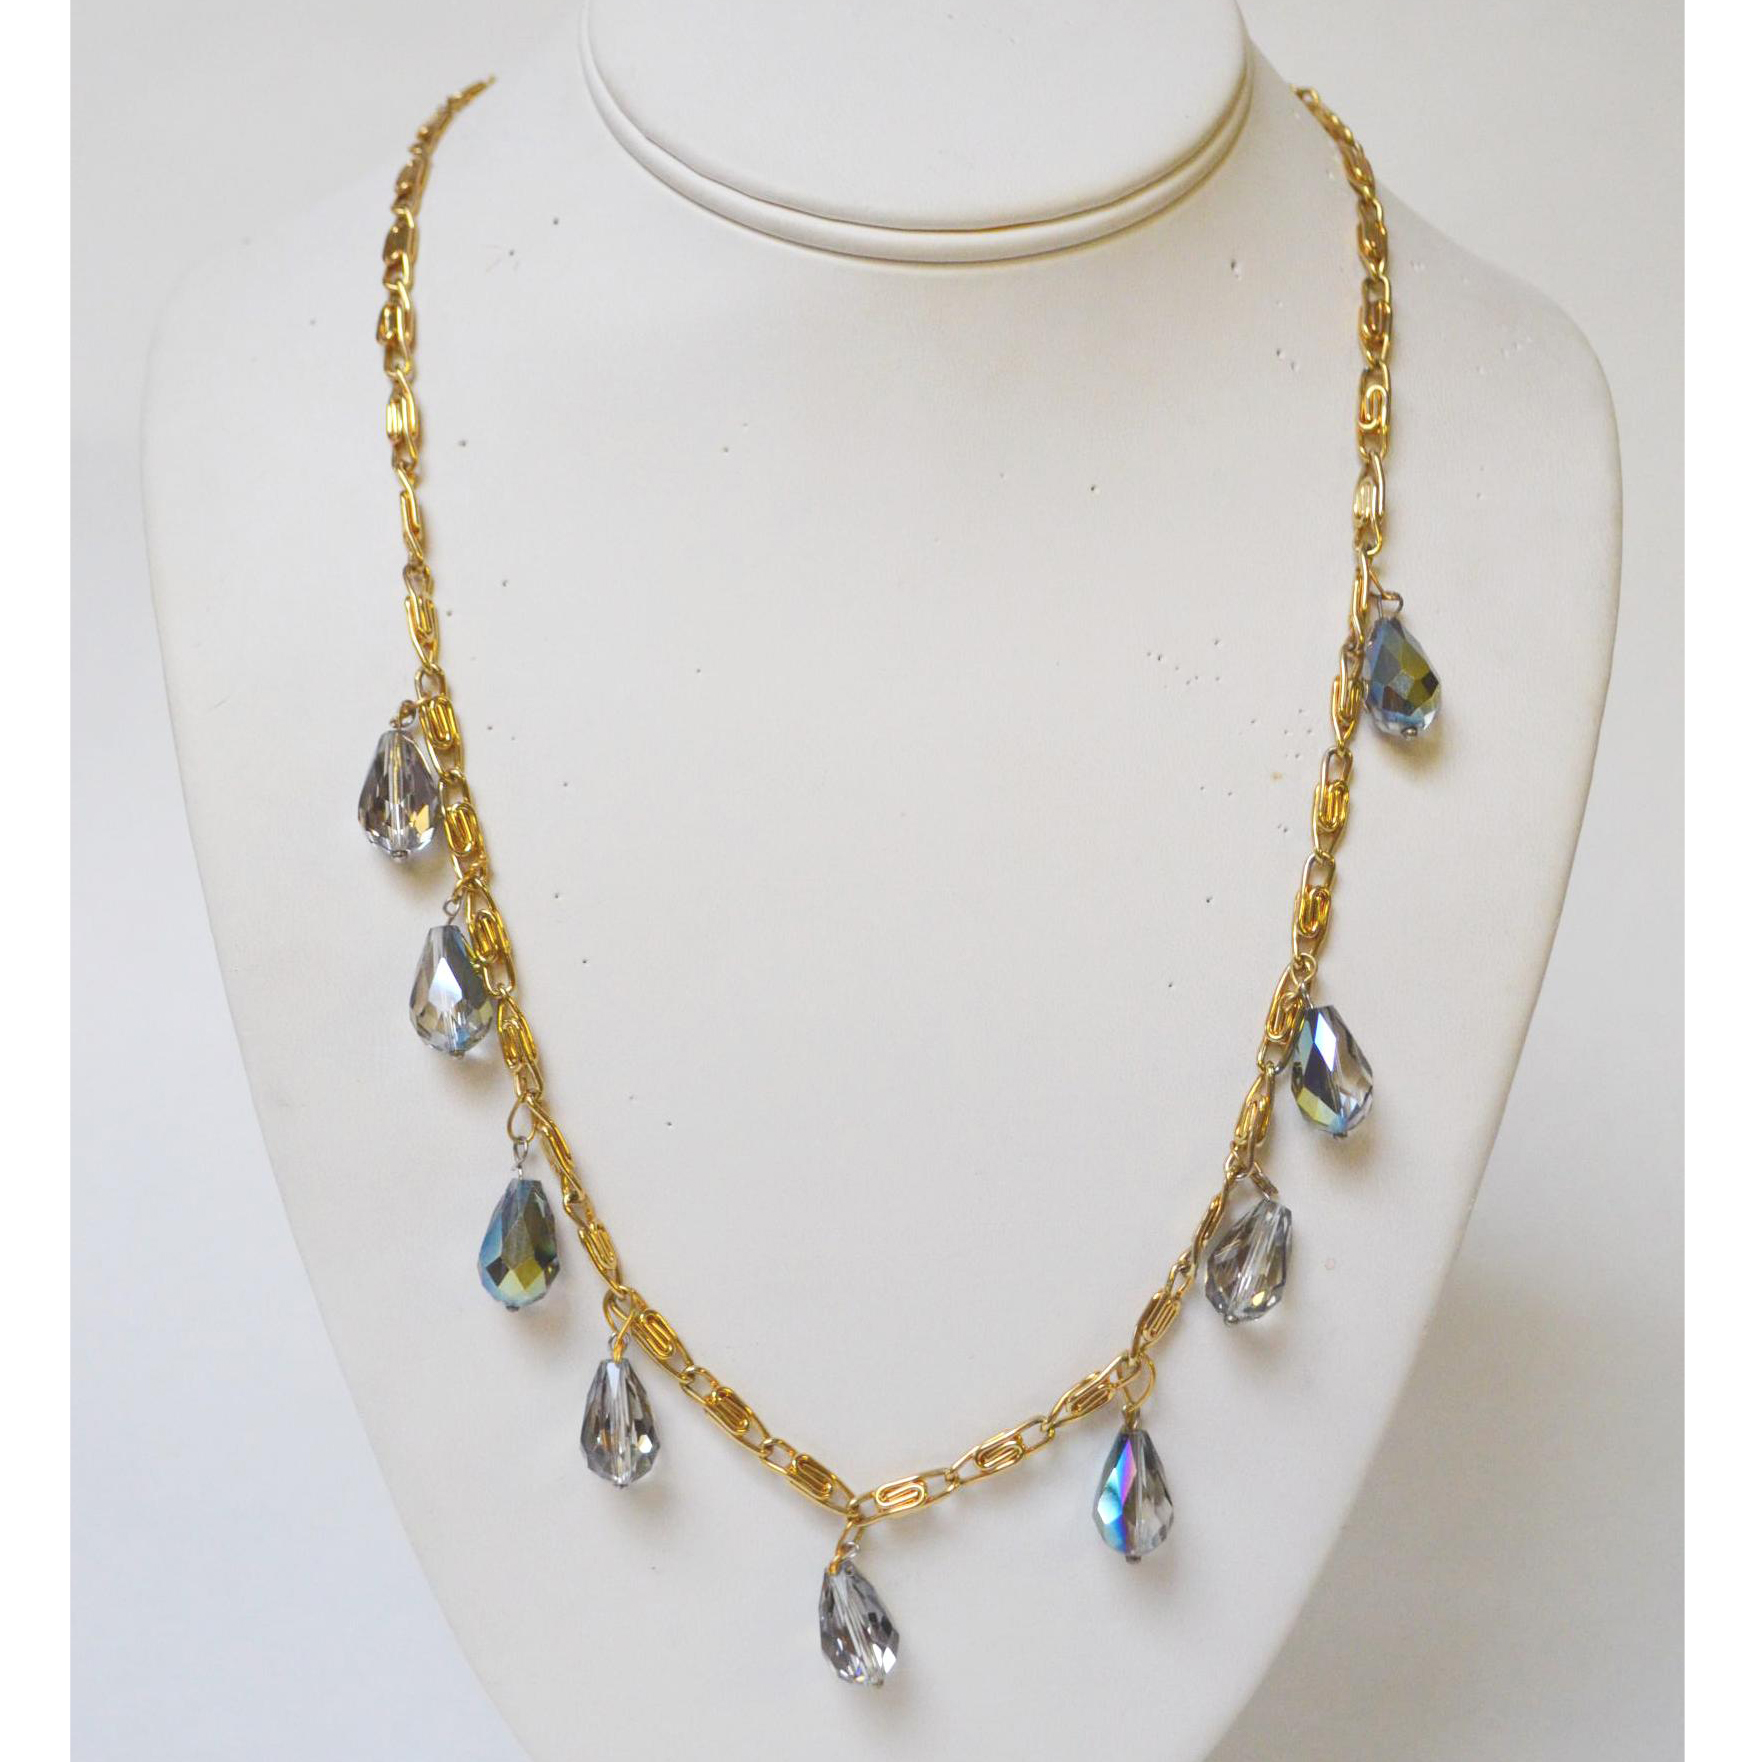 Dangling diamonds necklace by Carmelle Jean